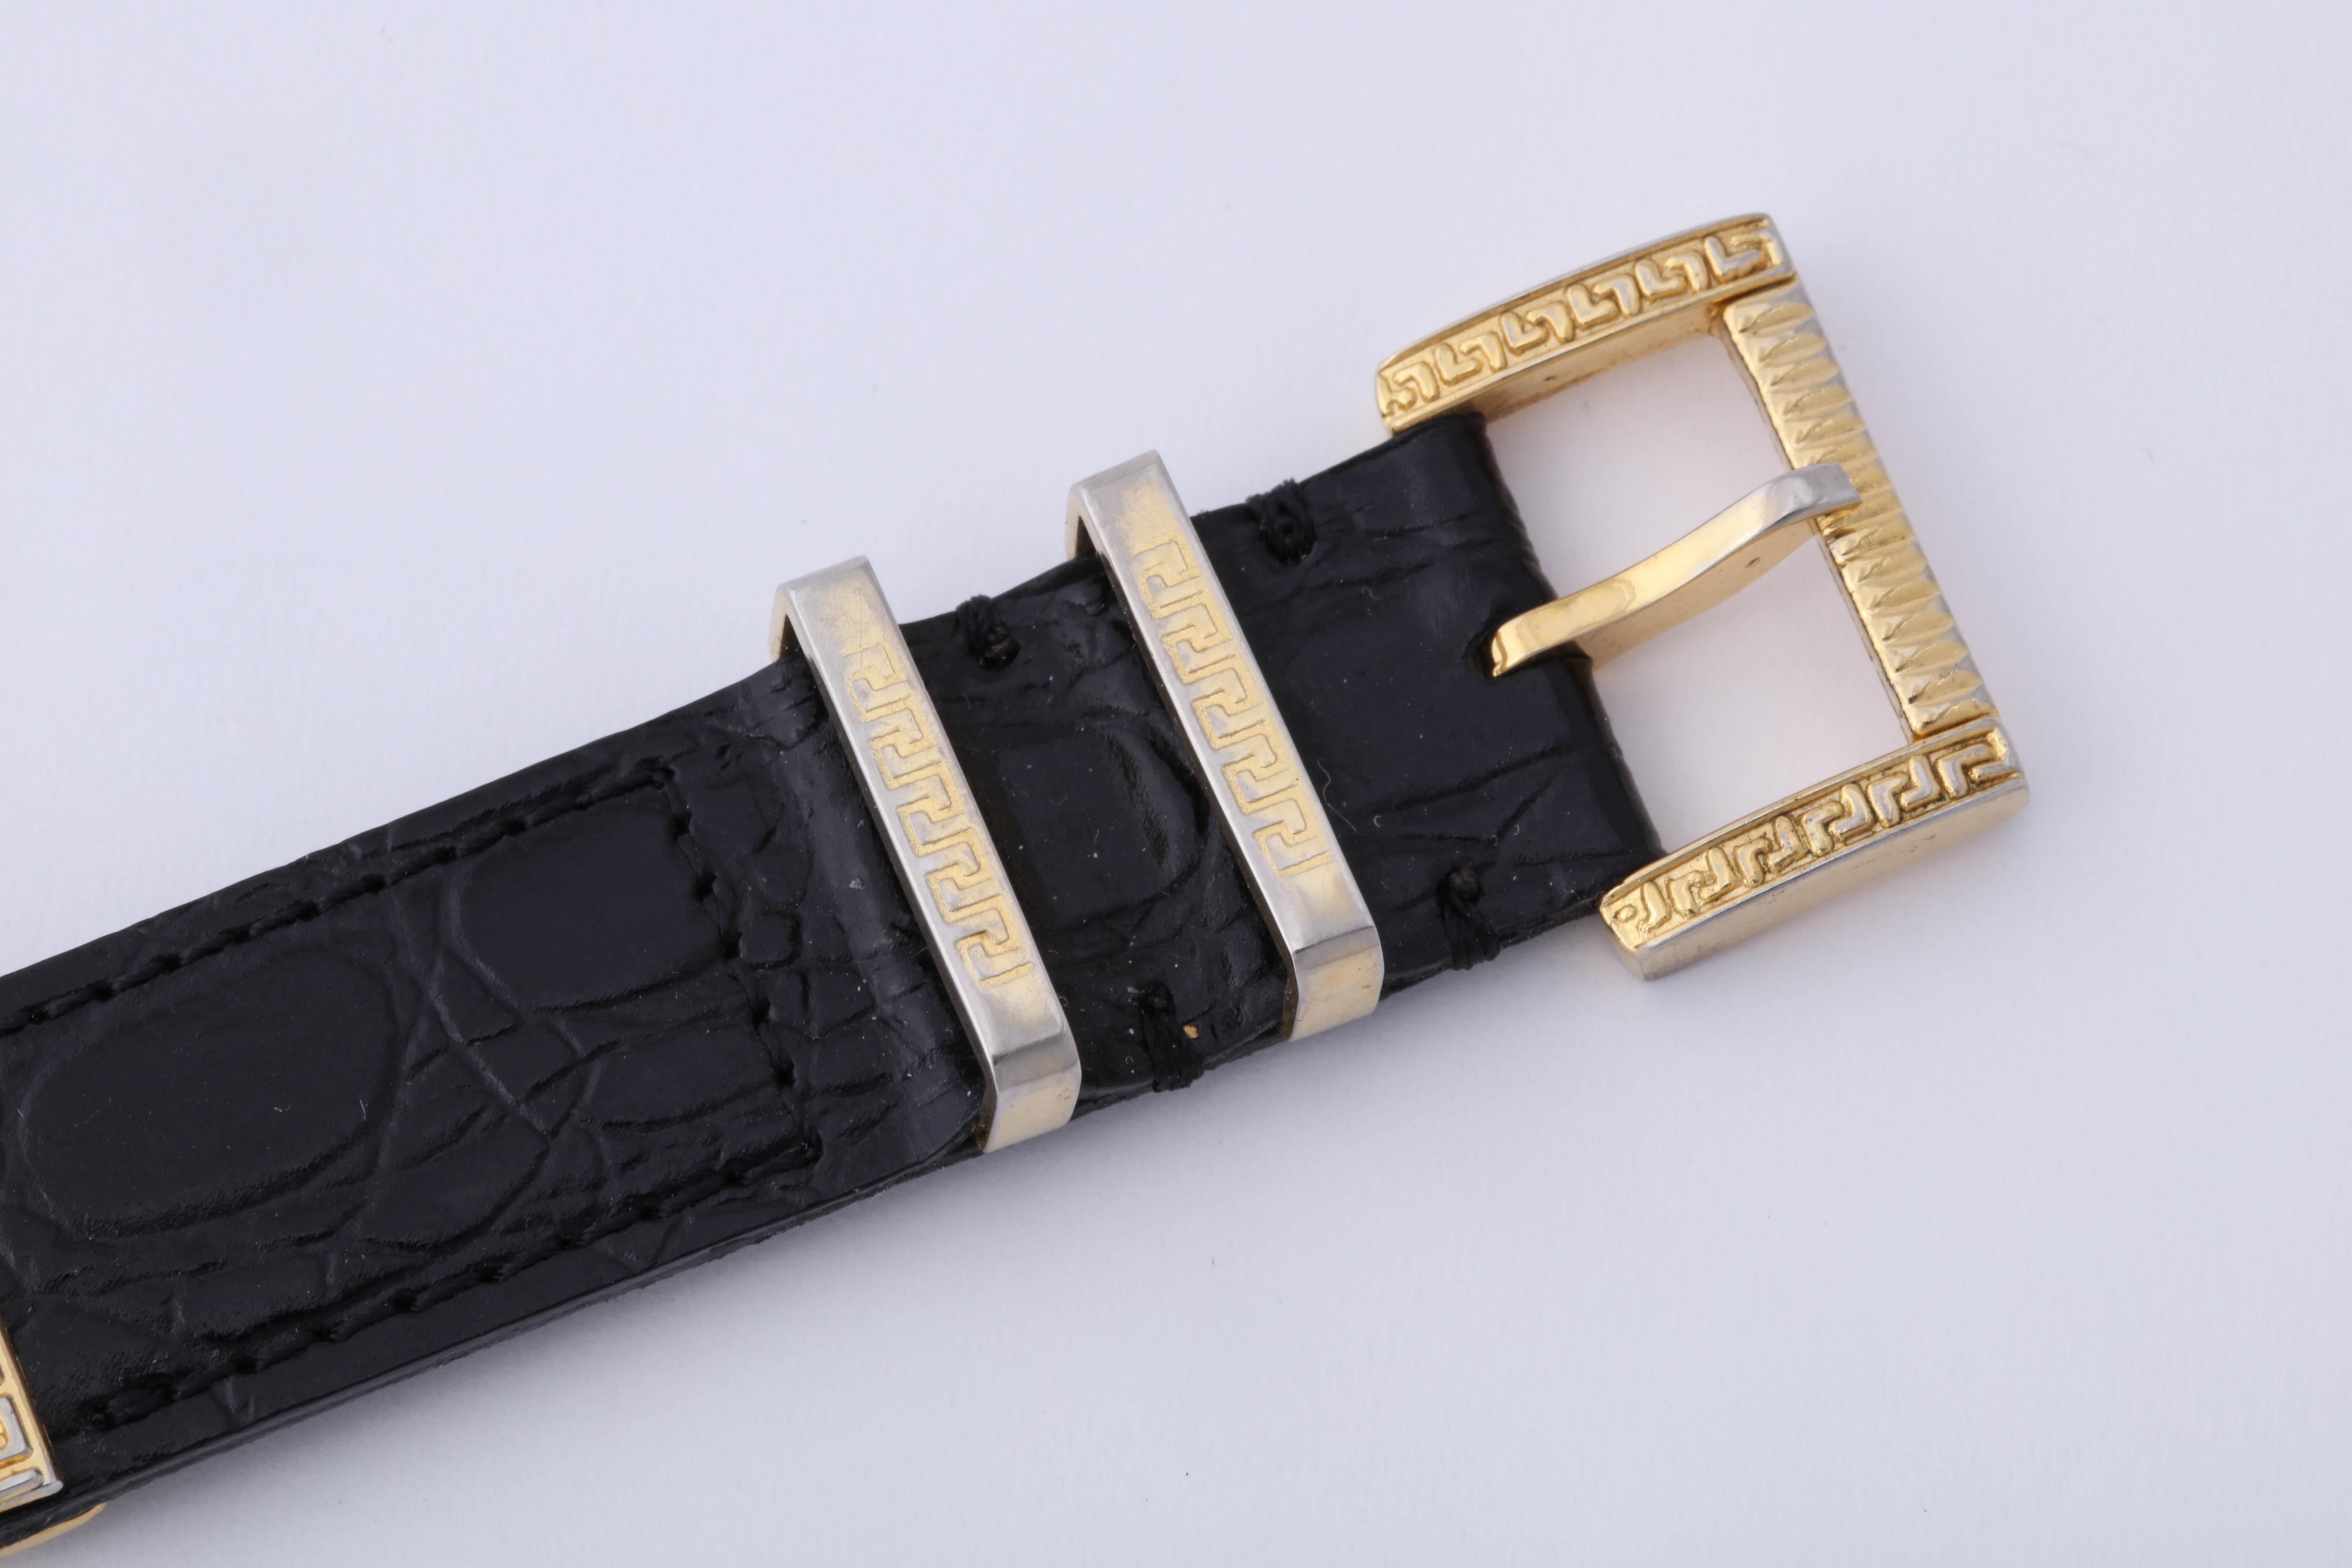   Gianni Versace Medusa Watch with Greek Key Motifs  For Sale 1